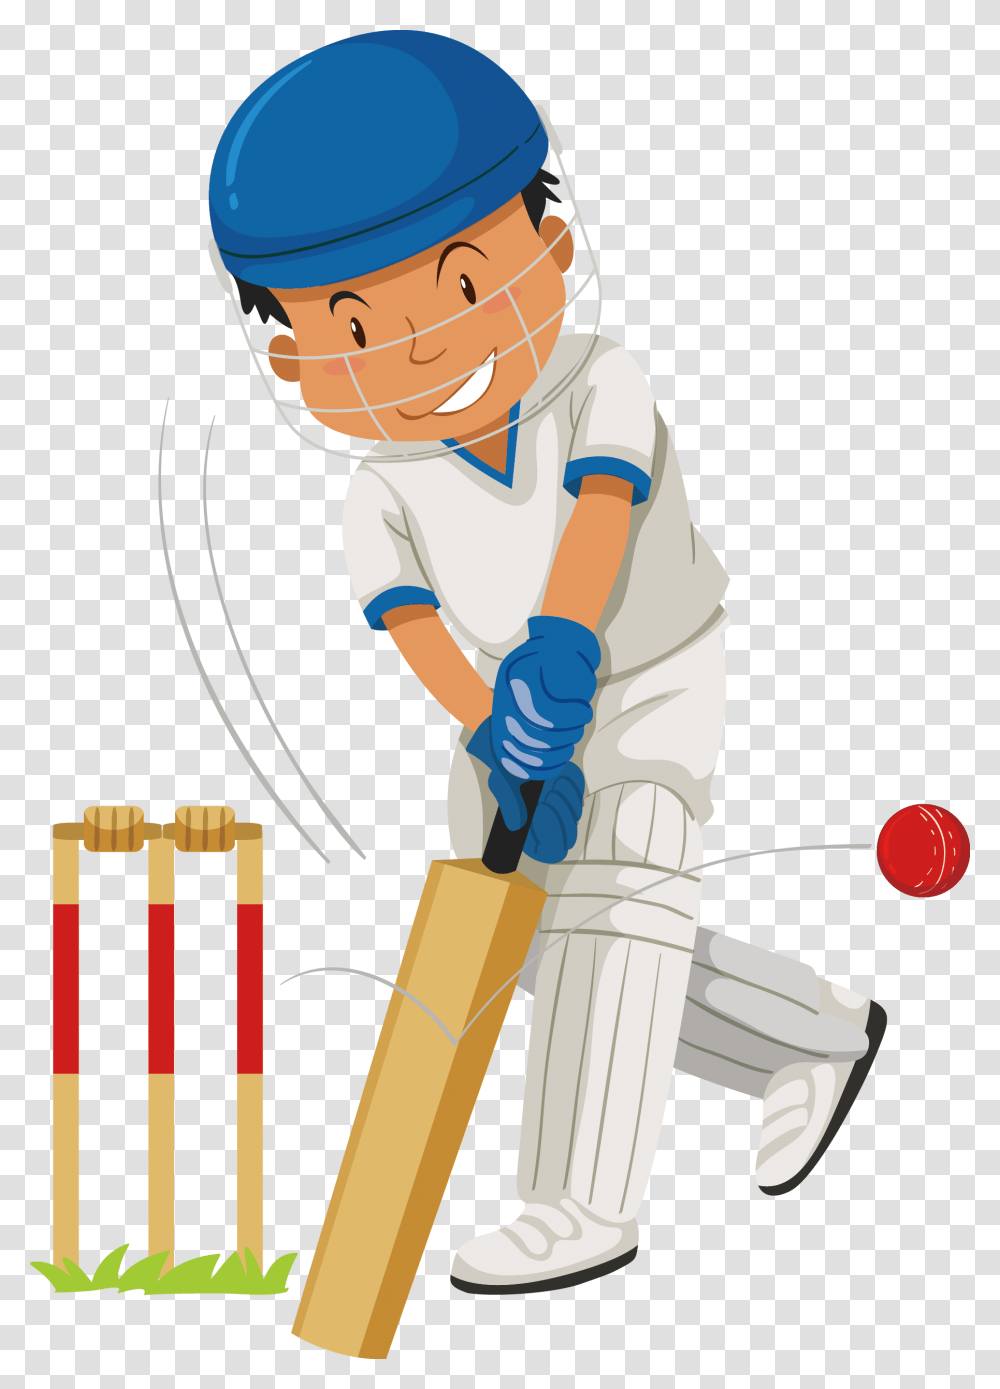 Cricket Bat Ball Cricket Bat With Ball, Person, Human, Helmet Transparent Png